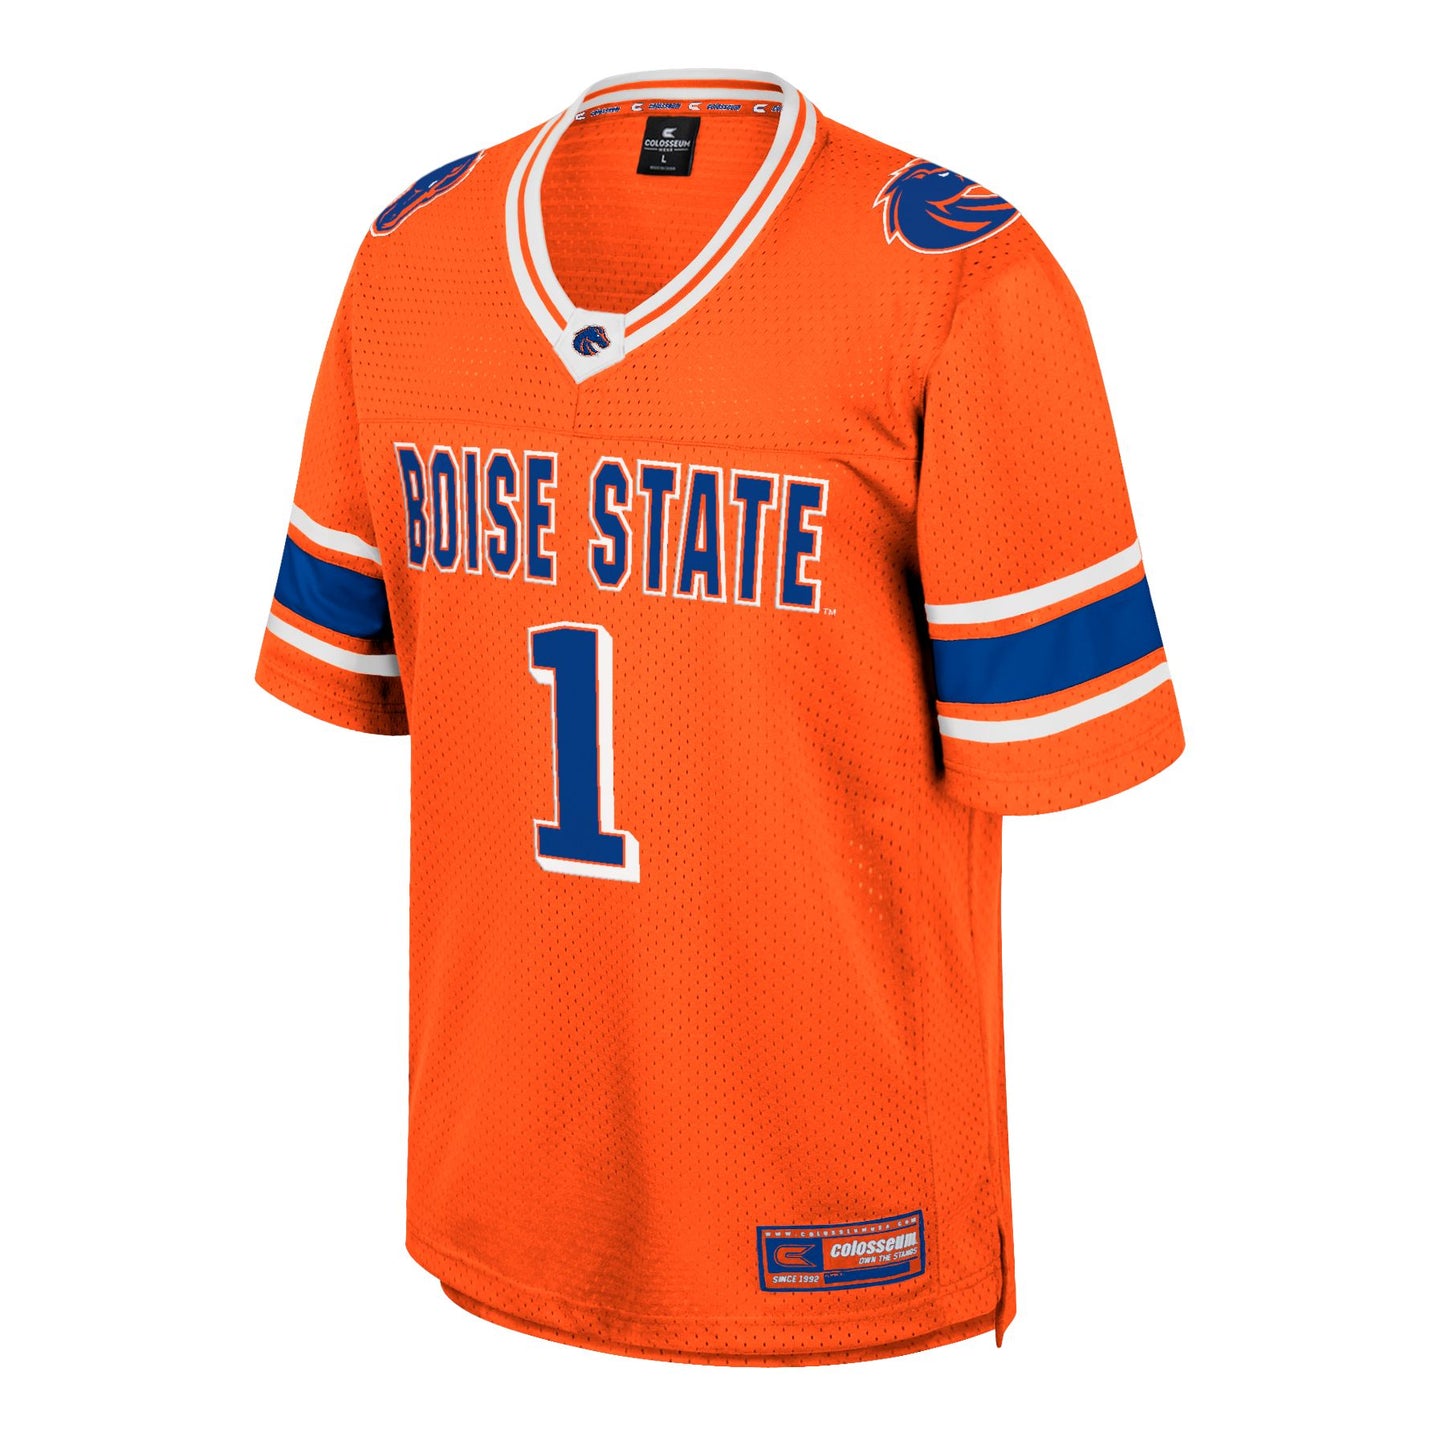 Boise State Broncos Colosseum Men's Retro Football Fan Jersey (Orange)